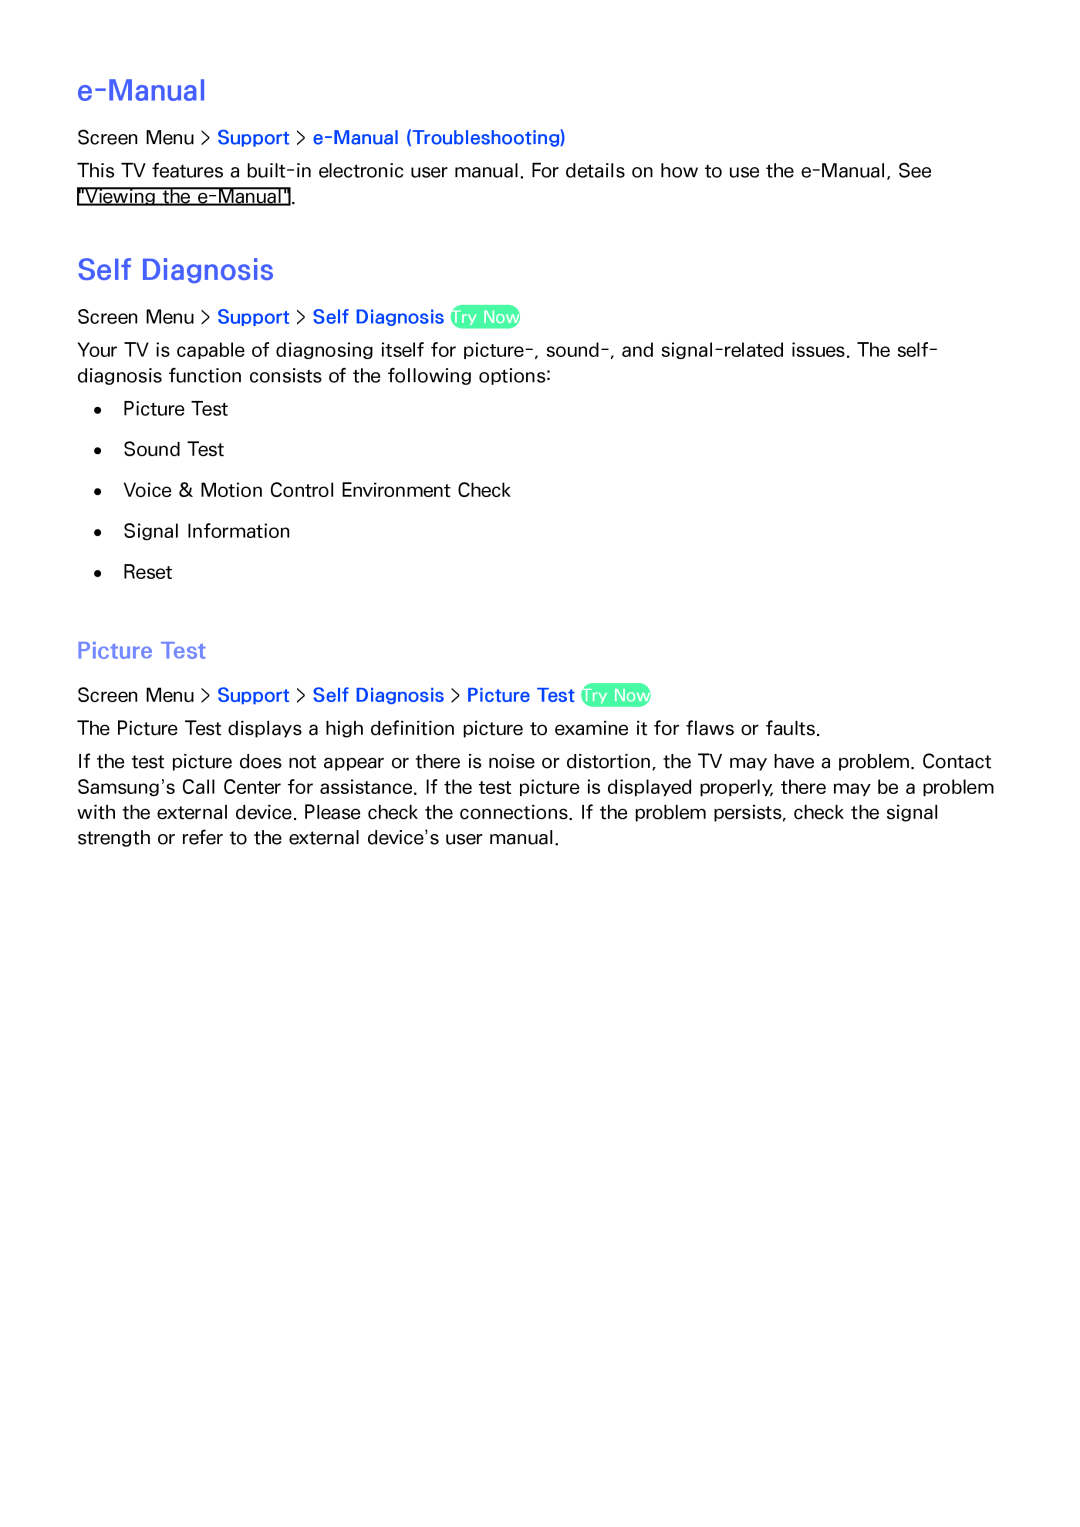 Samsung SEK-1000 manual Self Diagnosis, Picture Test, Screen Menu > Support > e-ManualTroubleshooting 